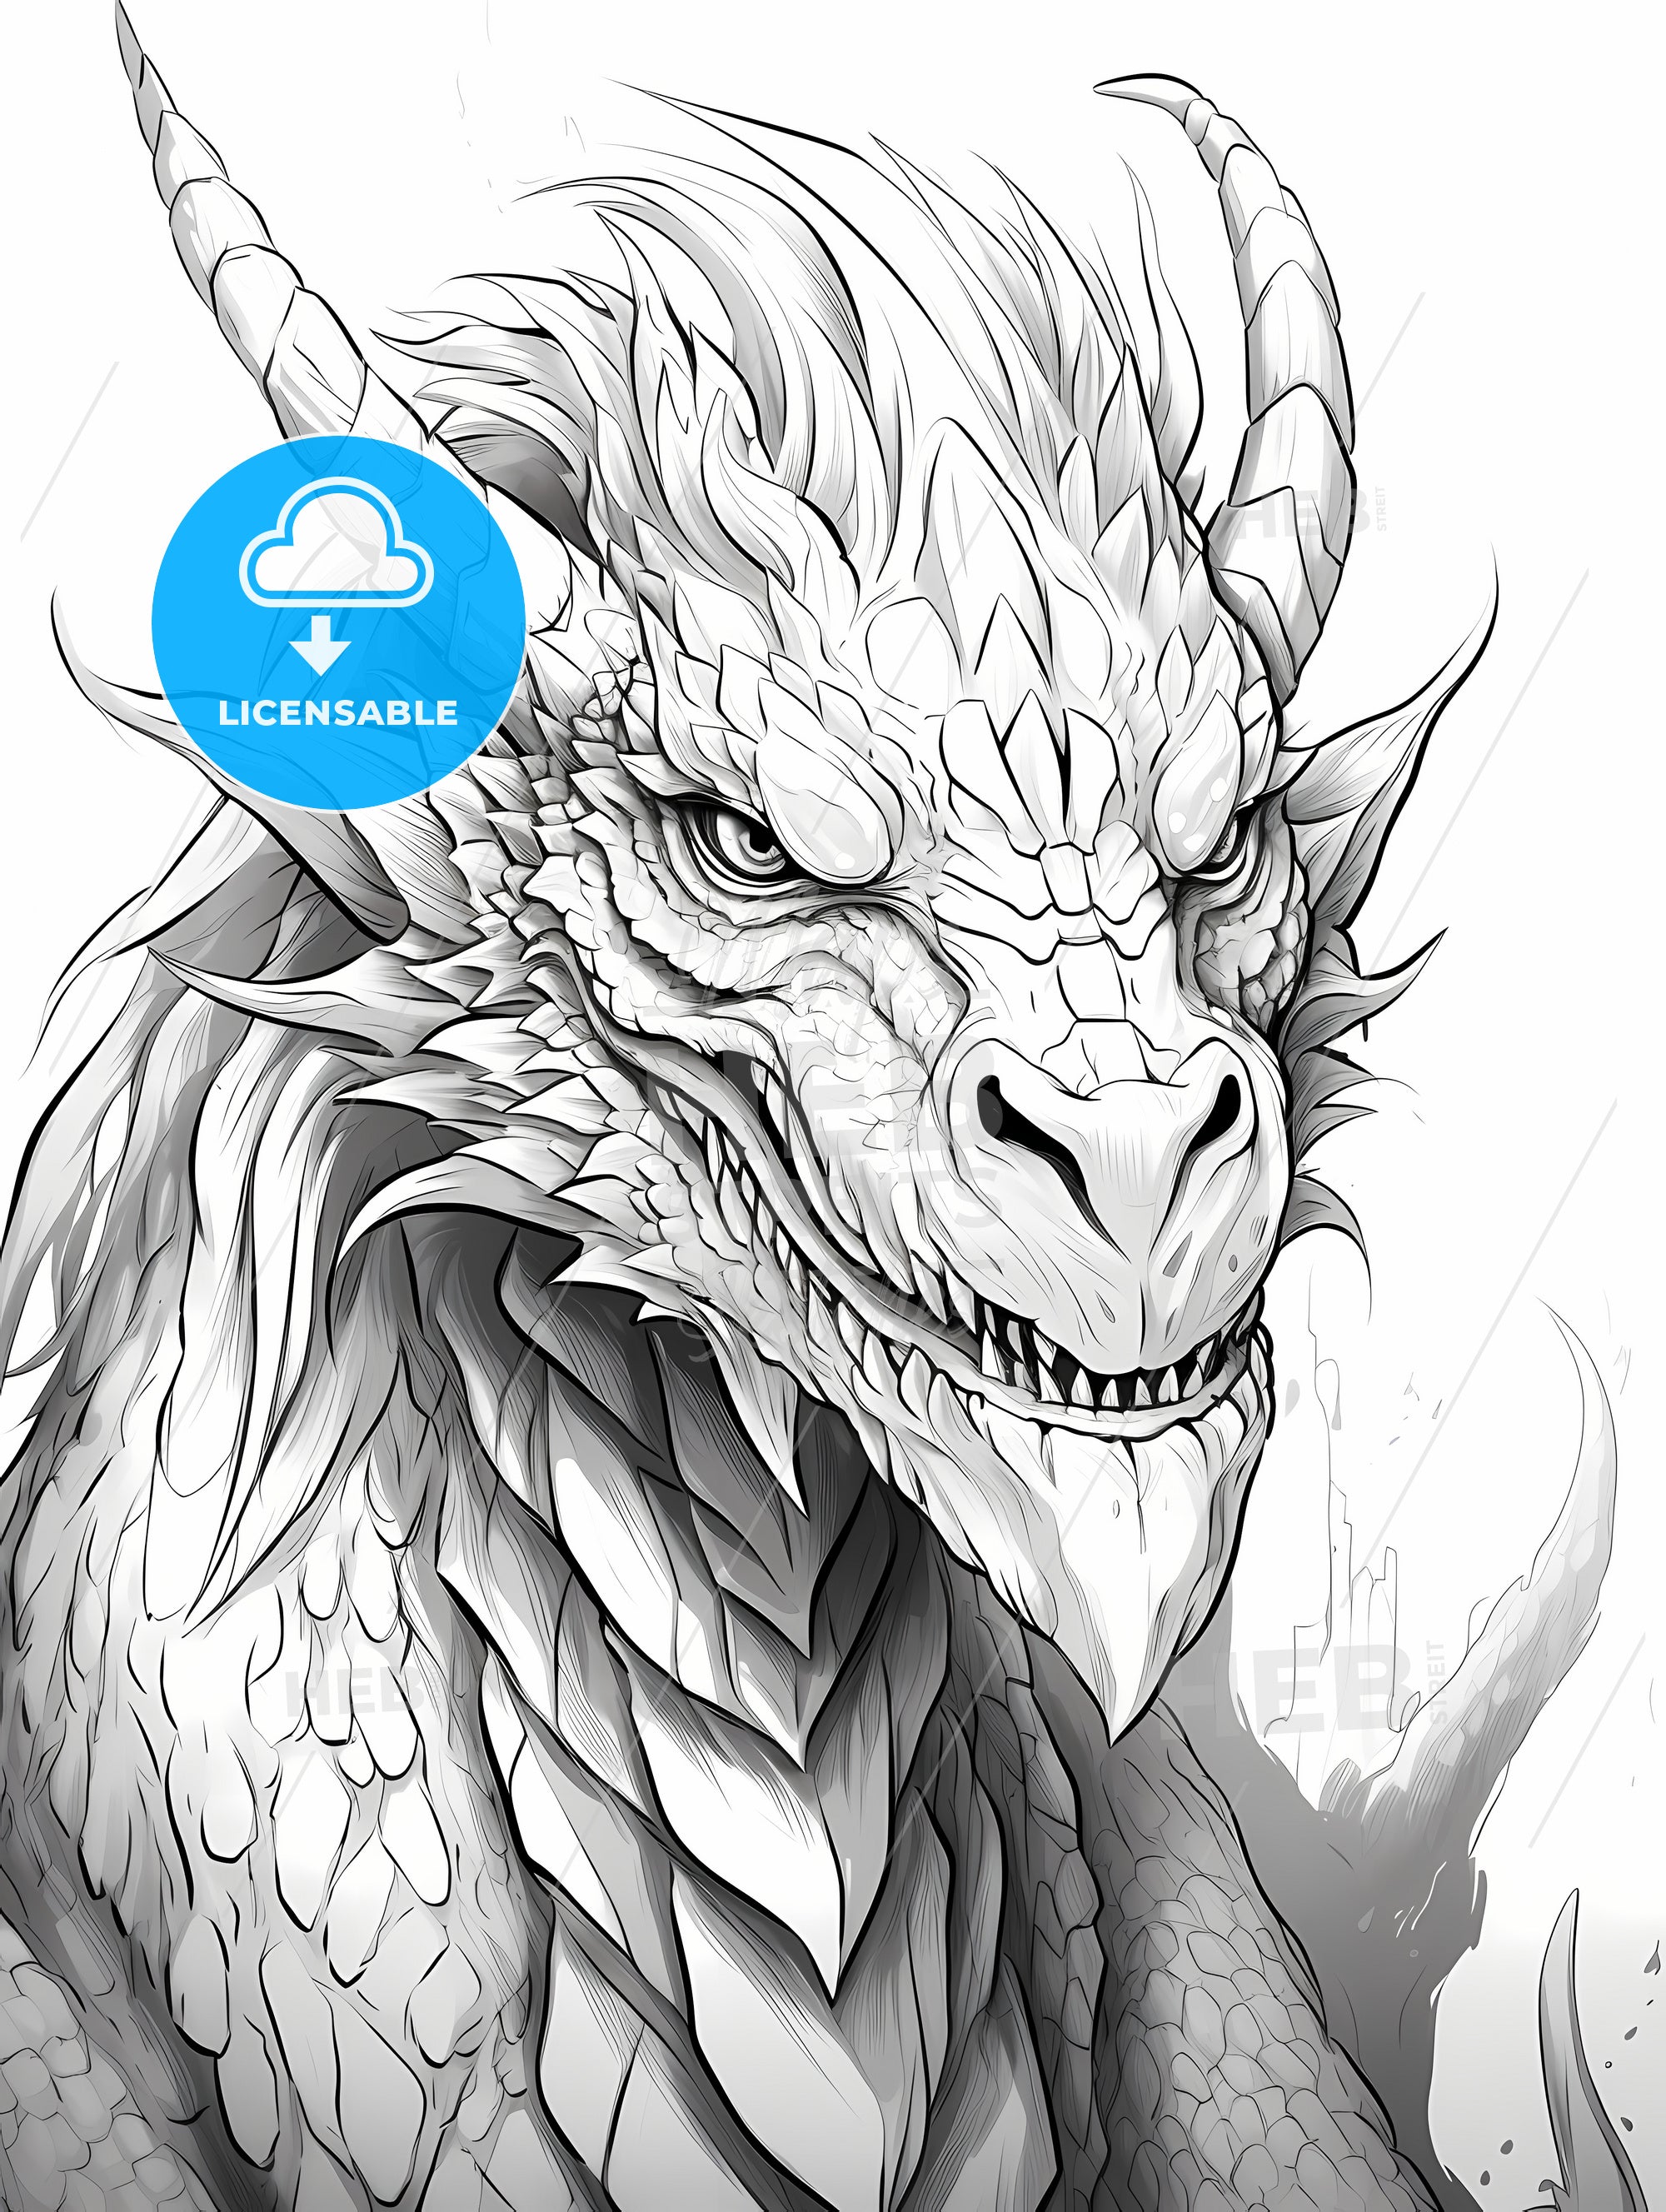 realistic dragon head drawing